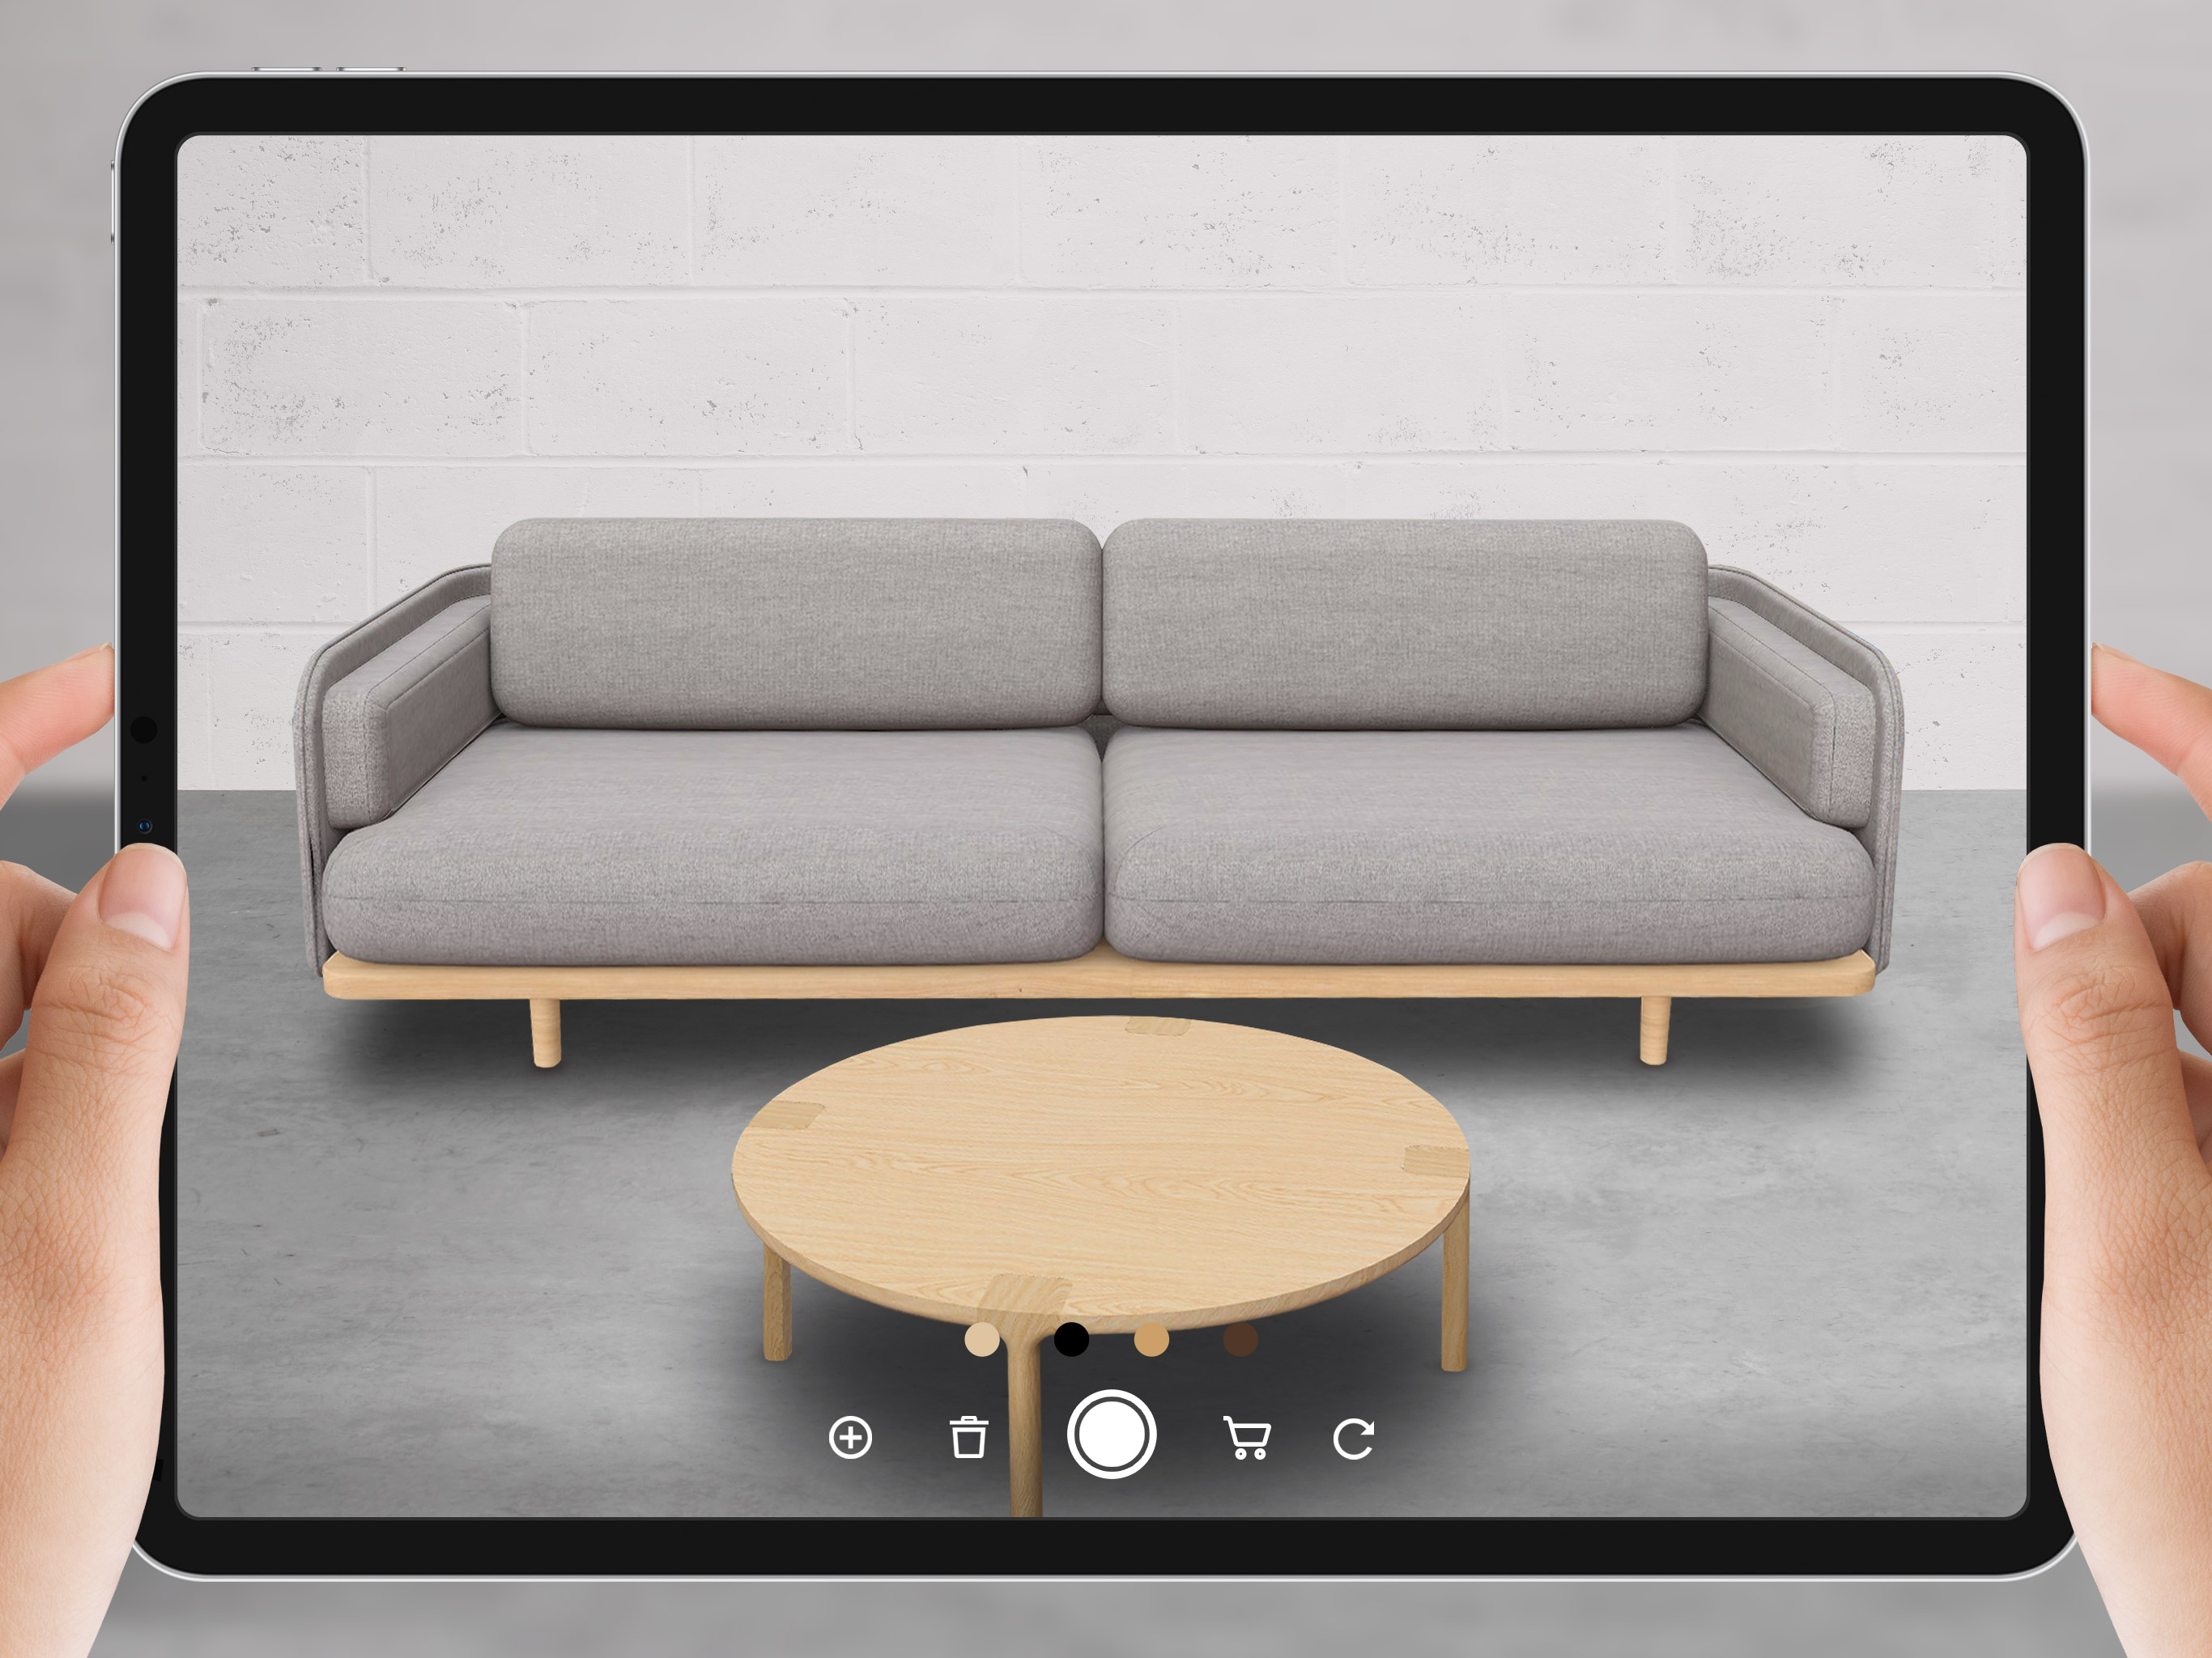 NAU Design Augmented Reality App